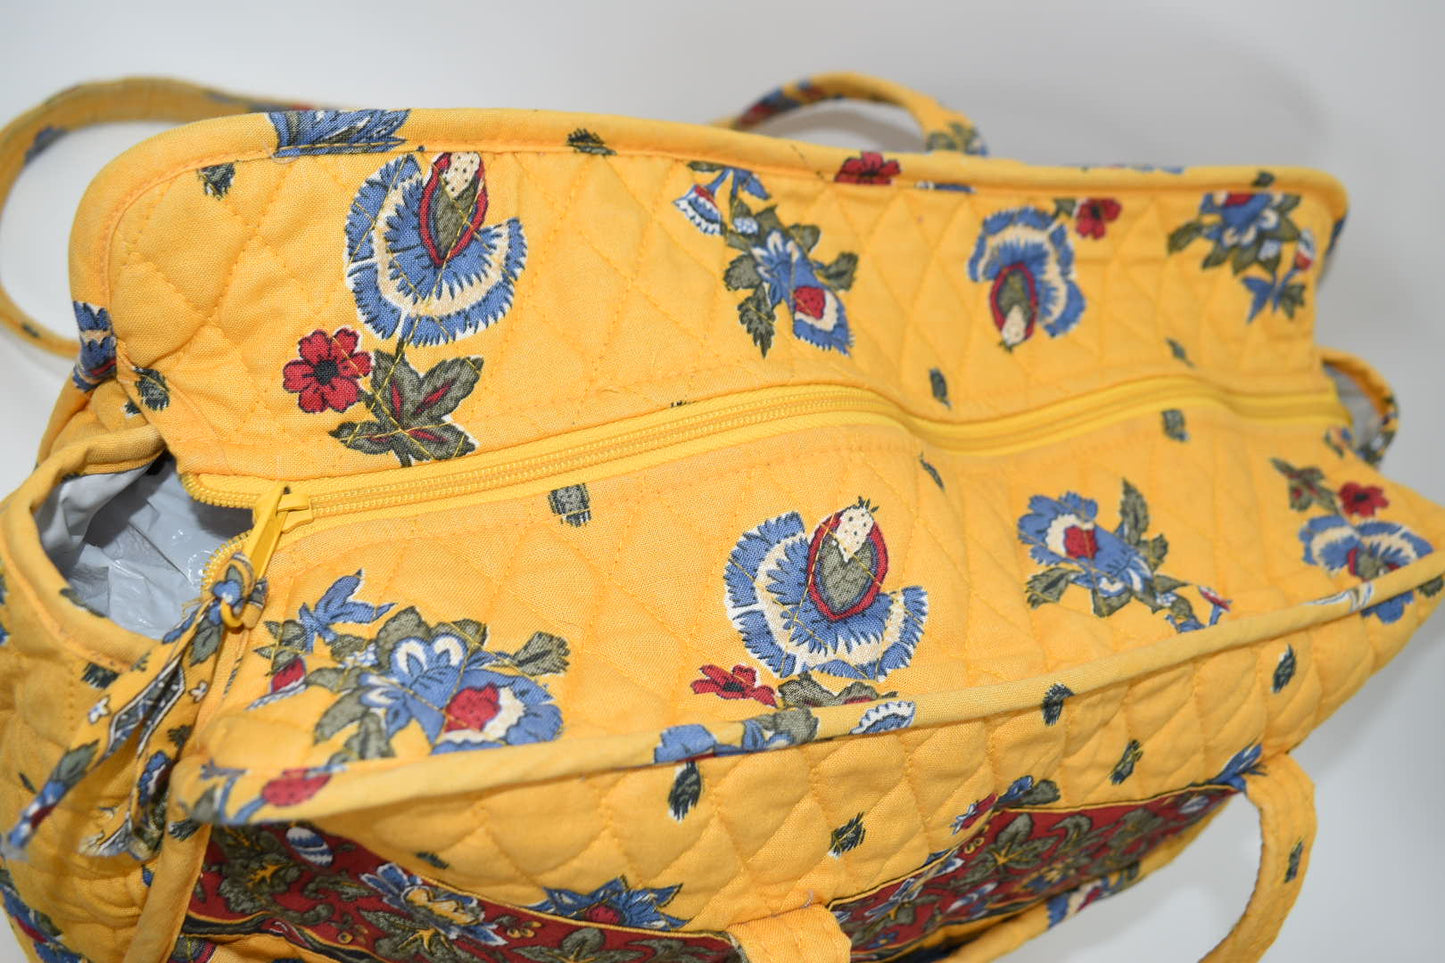 Vera Bradley Diaper Tote Bag in "French Yellow - 1999" Pattern